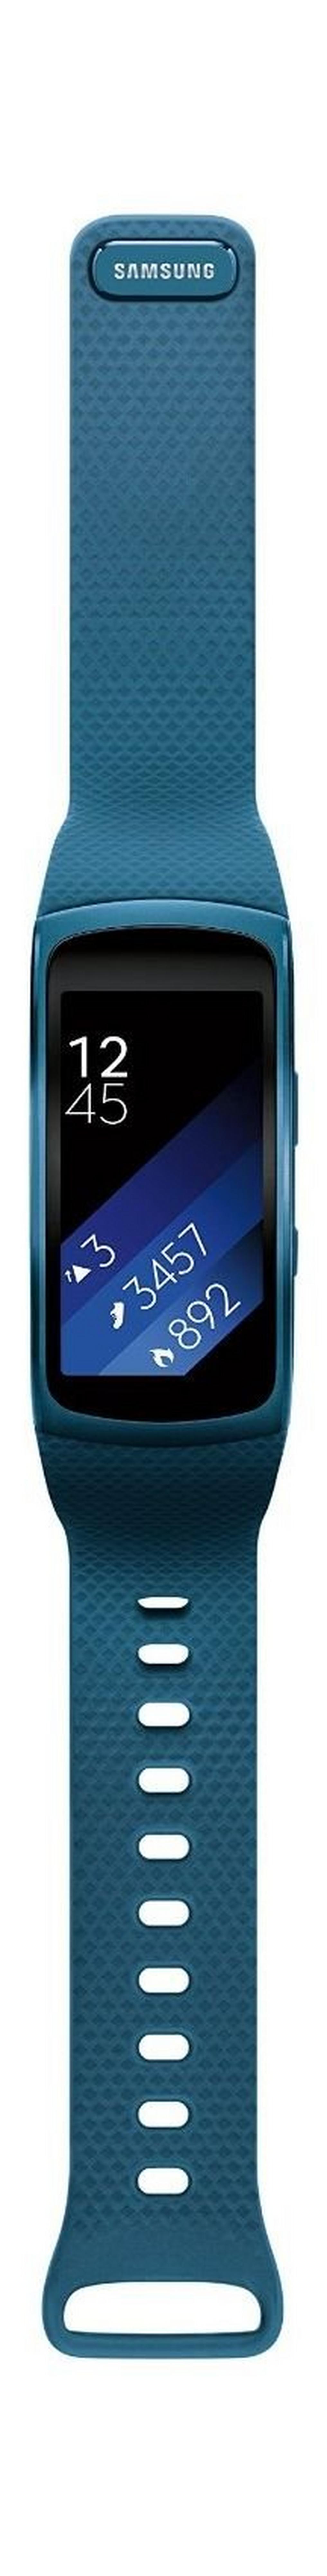 Samsung Gear Fit 2 Fitness Tracker (Small) – Blue